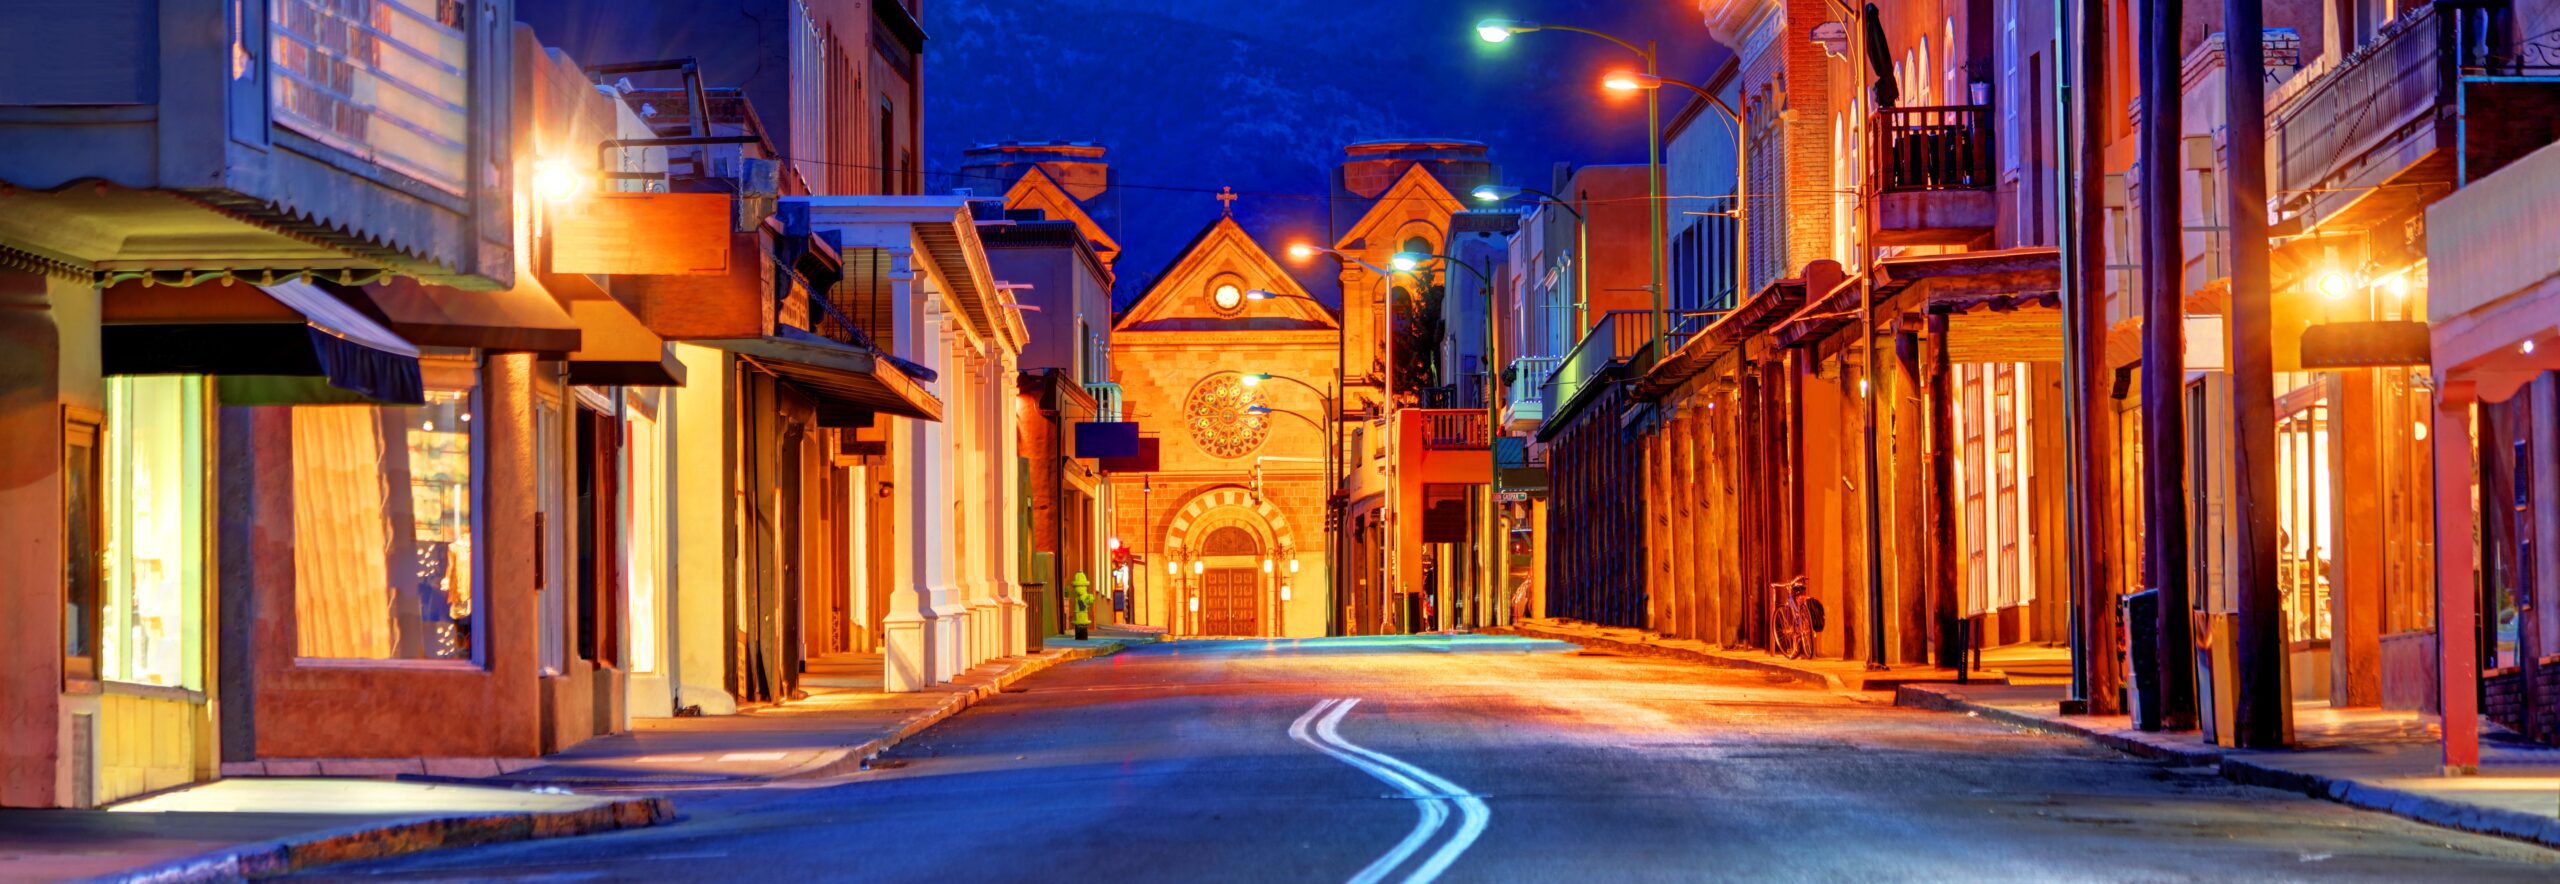 Santa Fe street scene by night